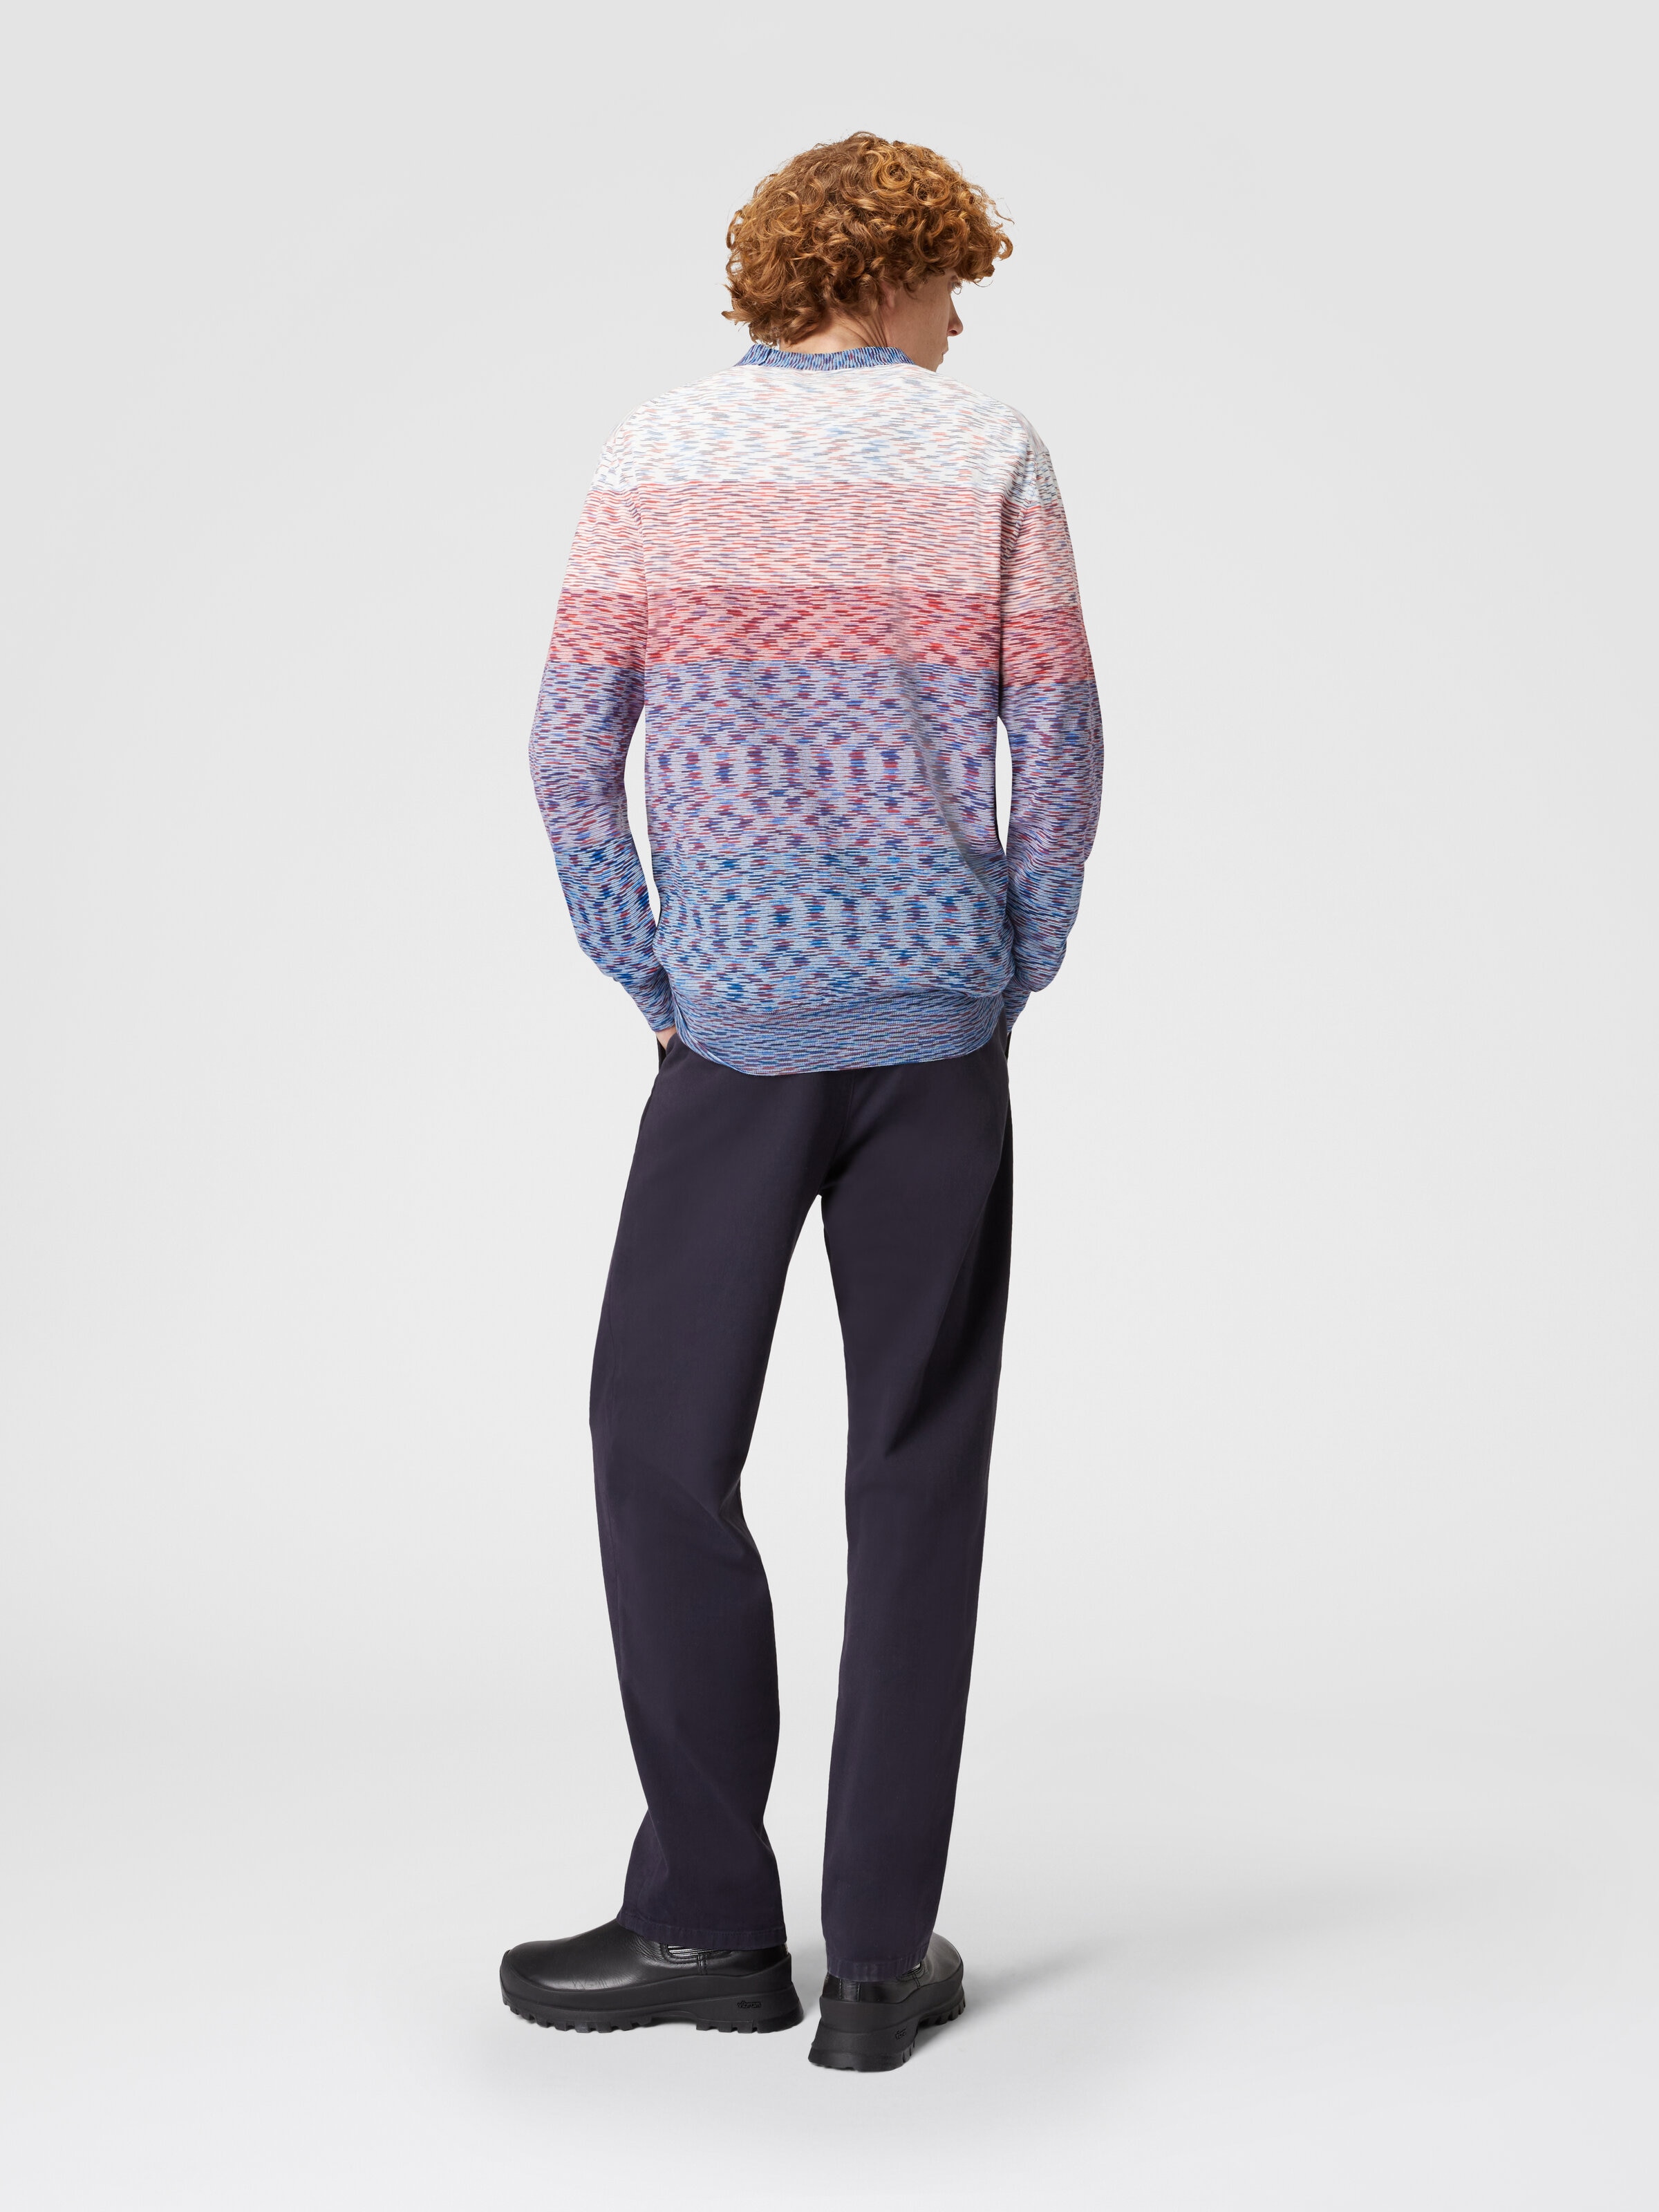 Cardigan in dégradé slub cotton knit, Multicoloured  - 2